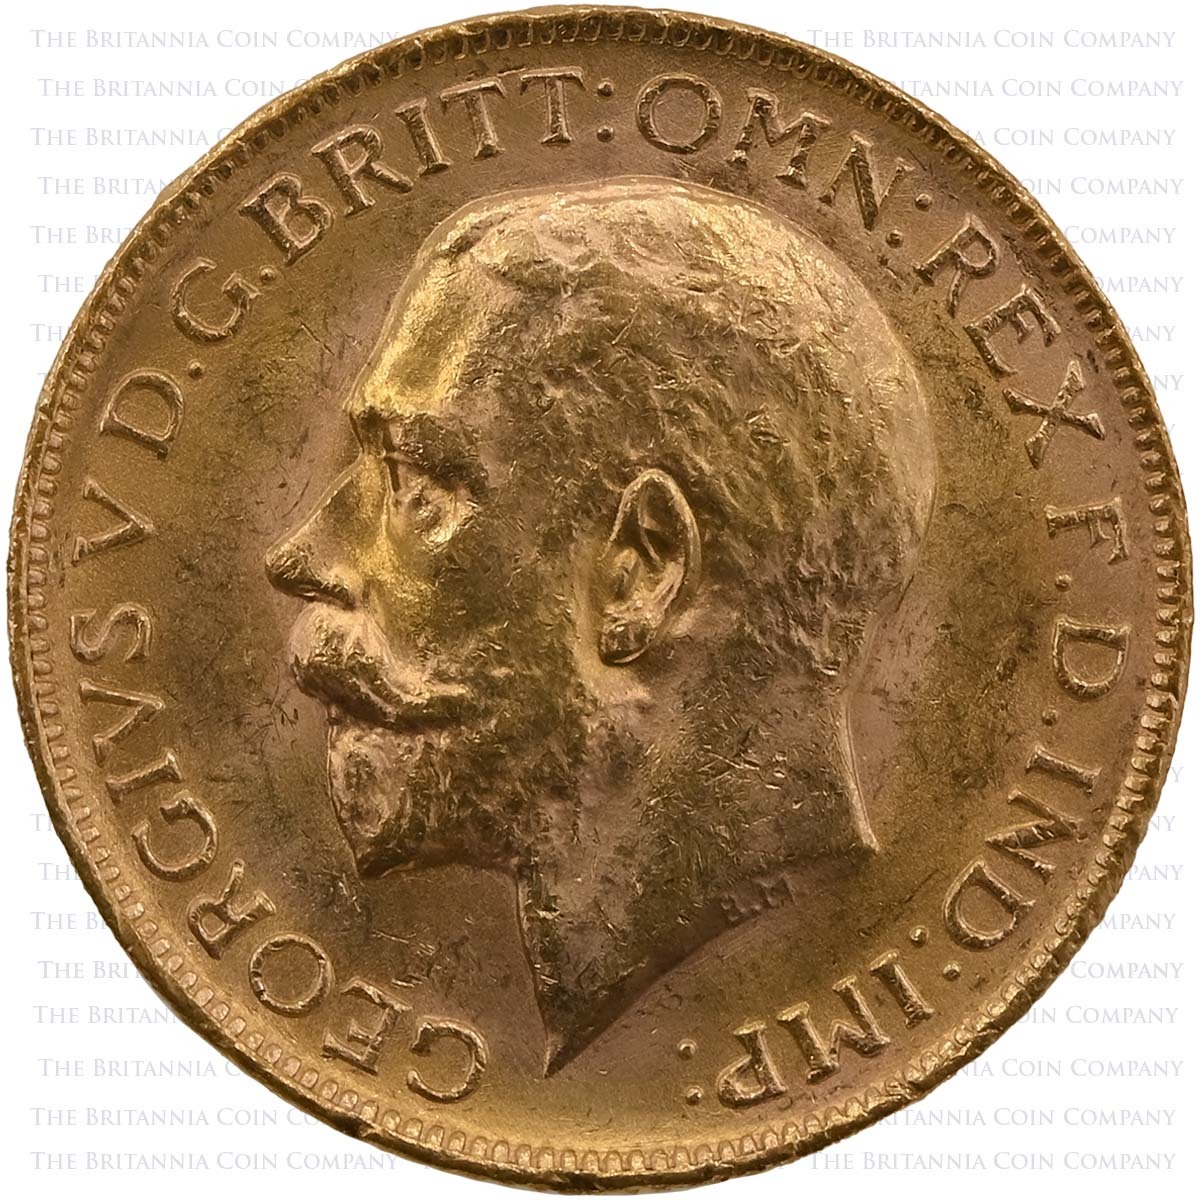 H15Q90SS 2016 Elizabeth II 2 Coin Sovereign Set Queen’s 90th Birthday 1926 George V Obverse